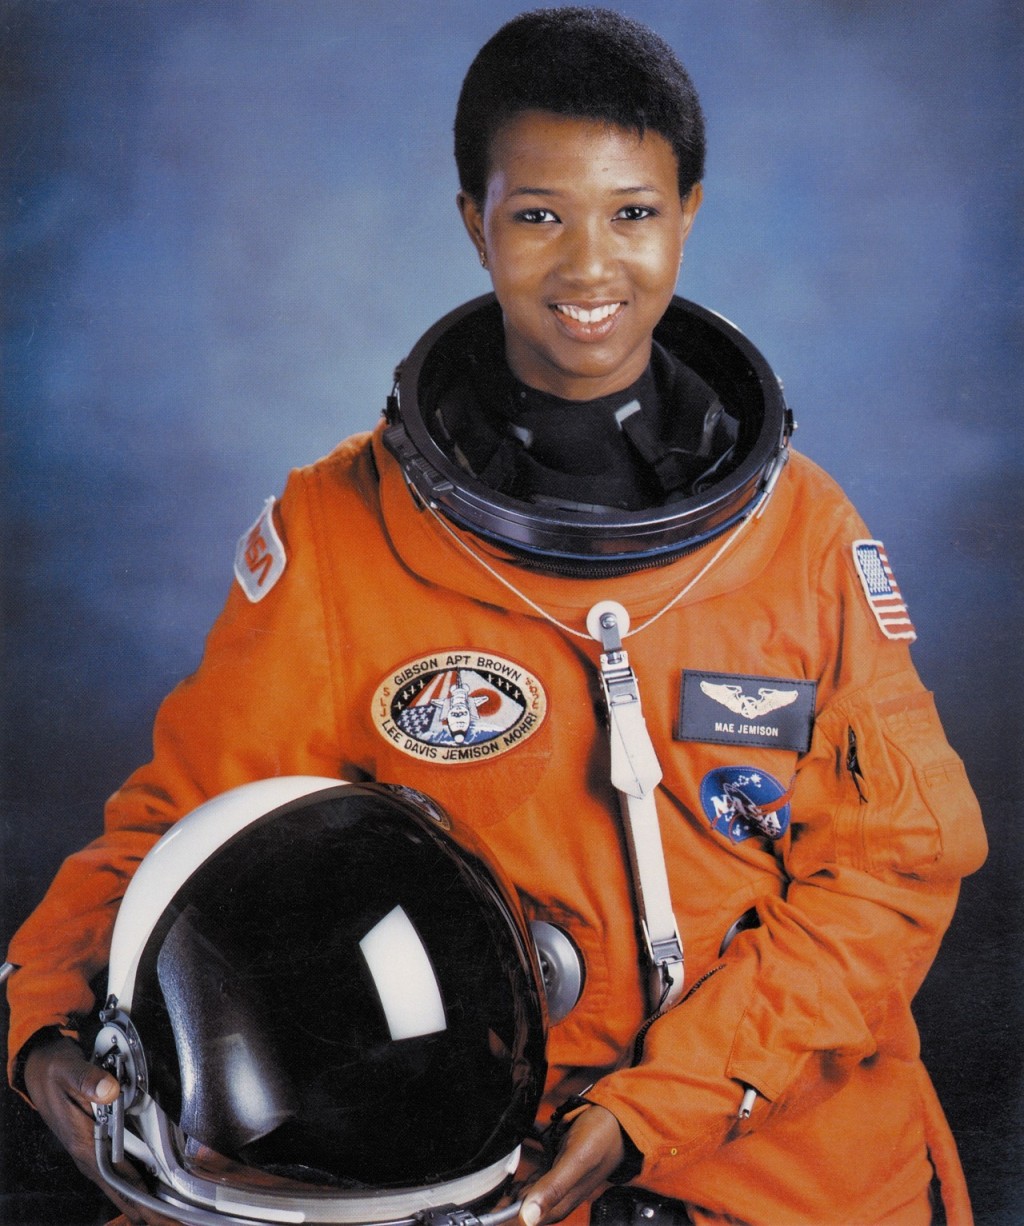 Dr. Mae Jemison – NASA Astronaut